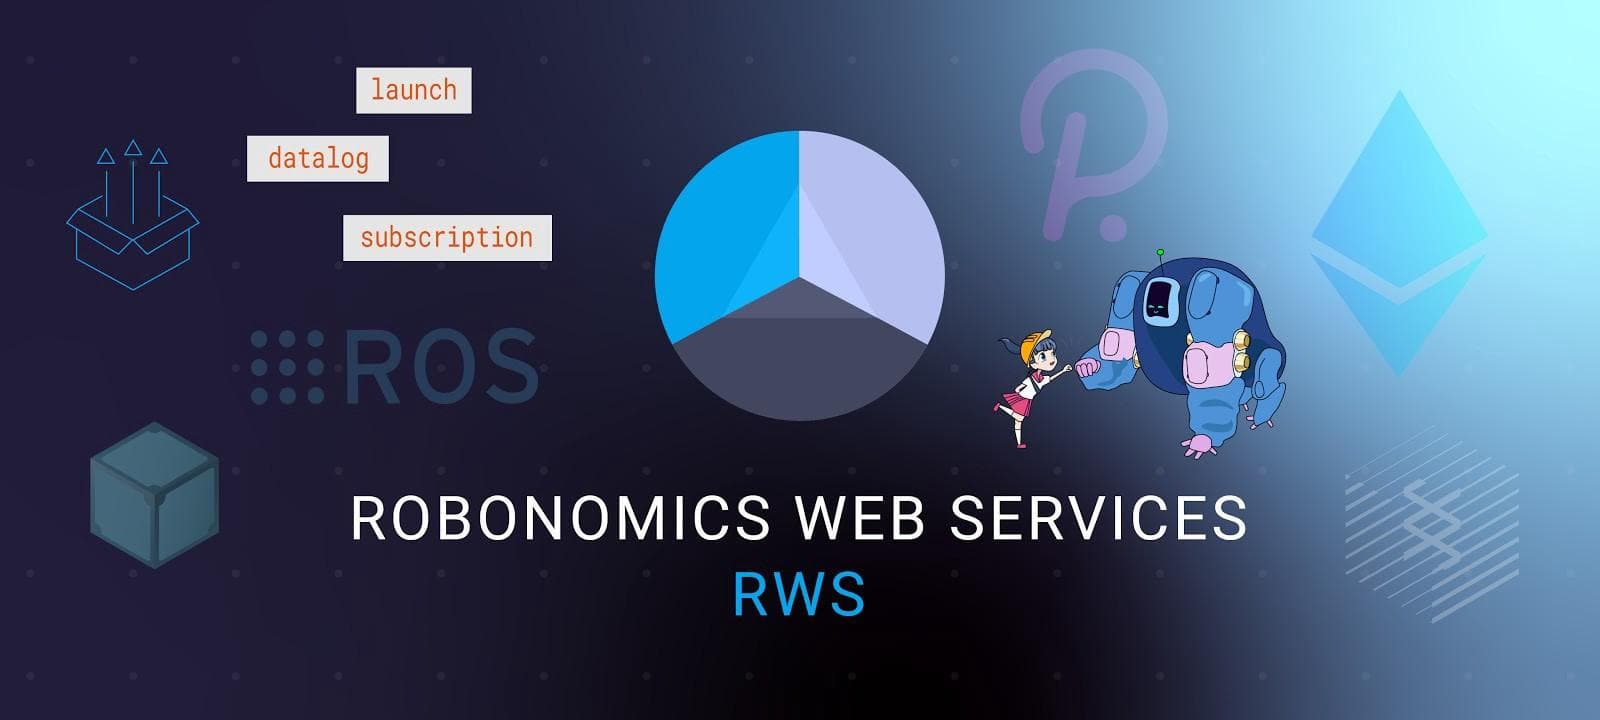 The key functions of Robonomics Web Services (RWS)